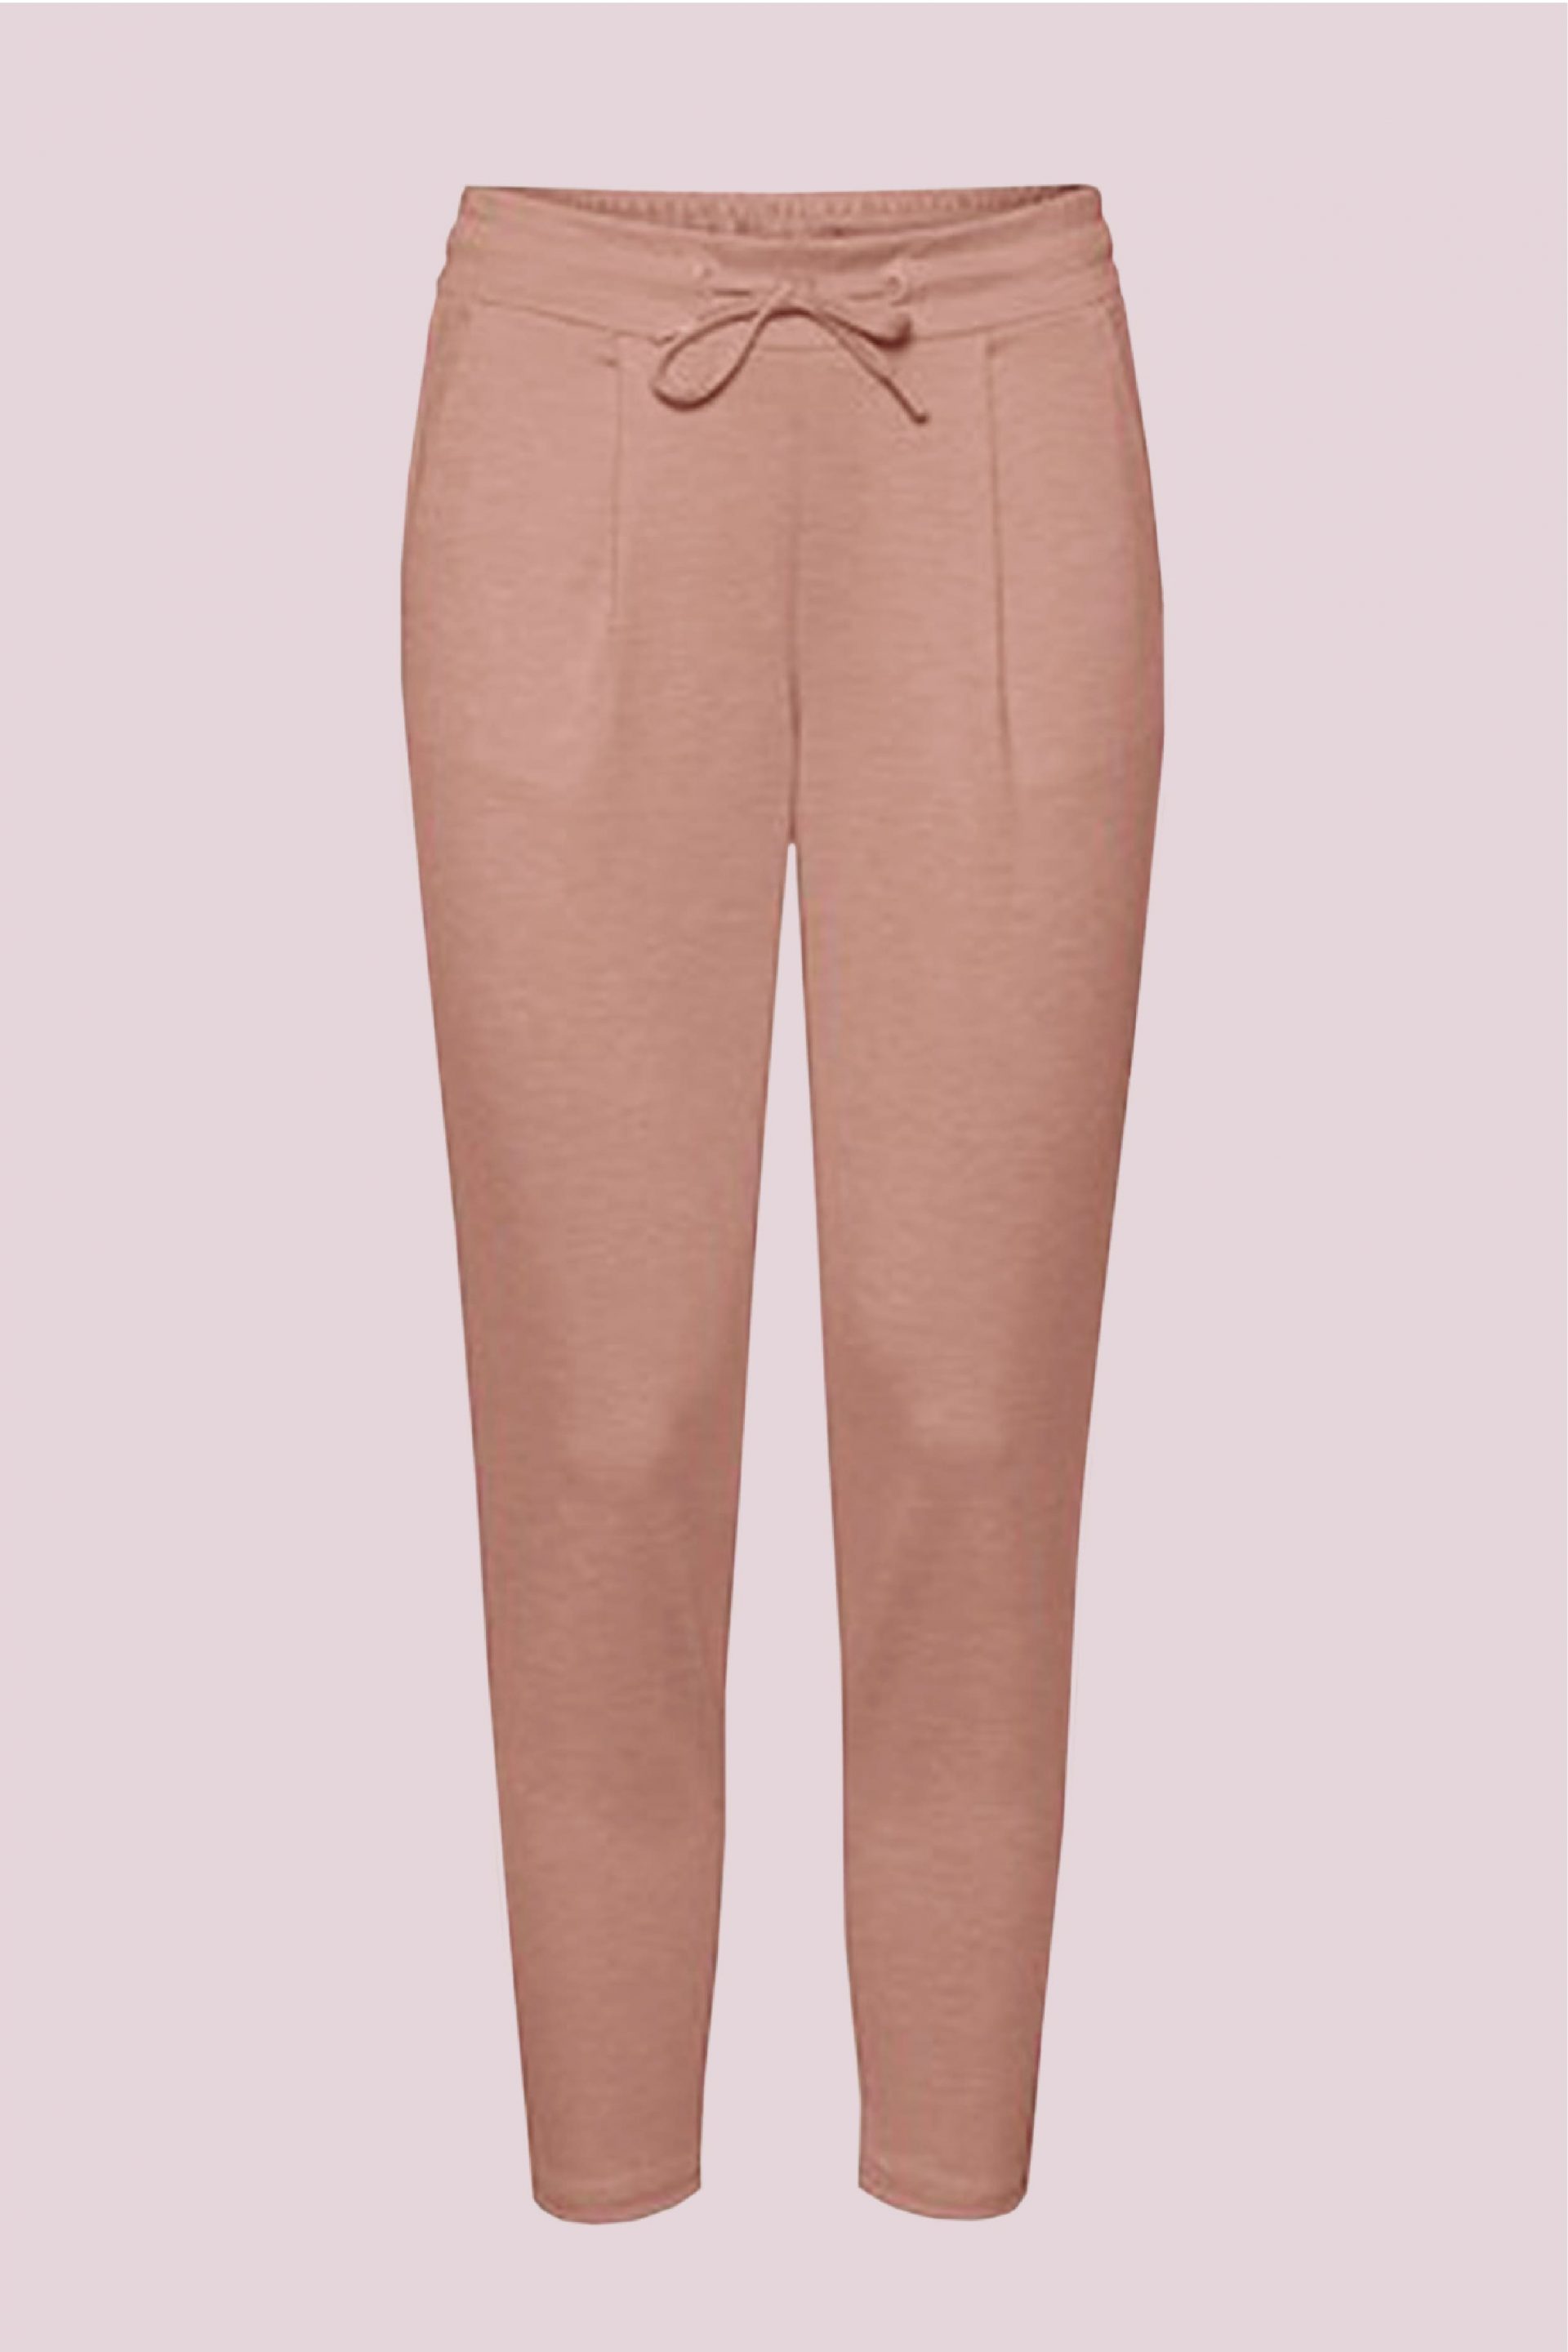 pantalones rosas tendencia 2021